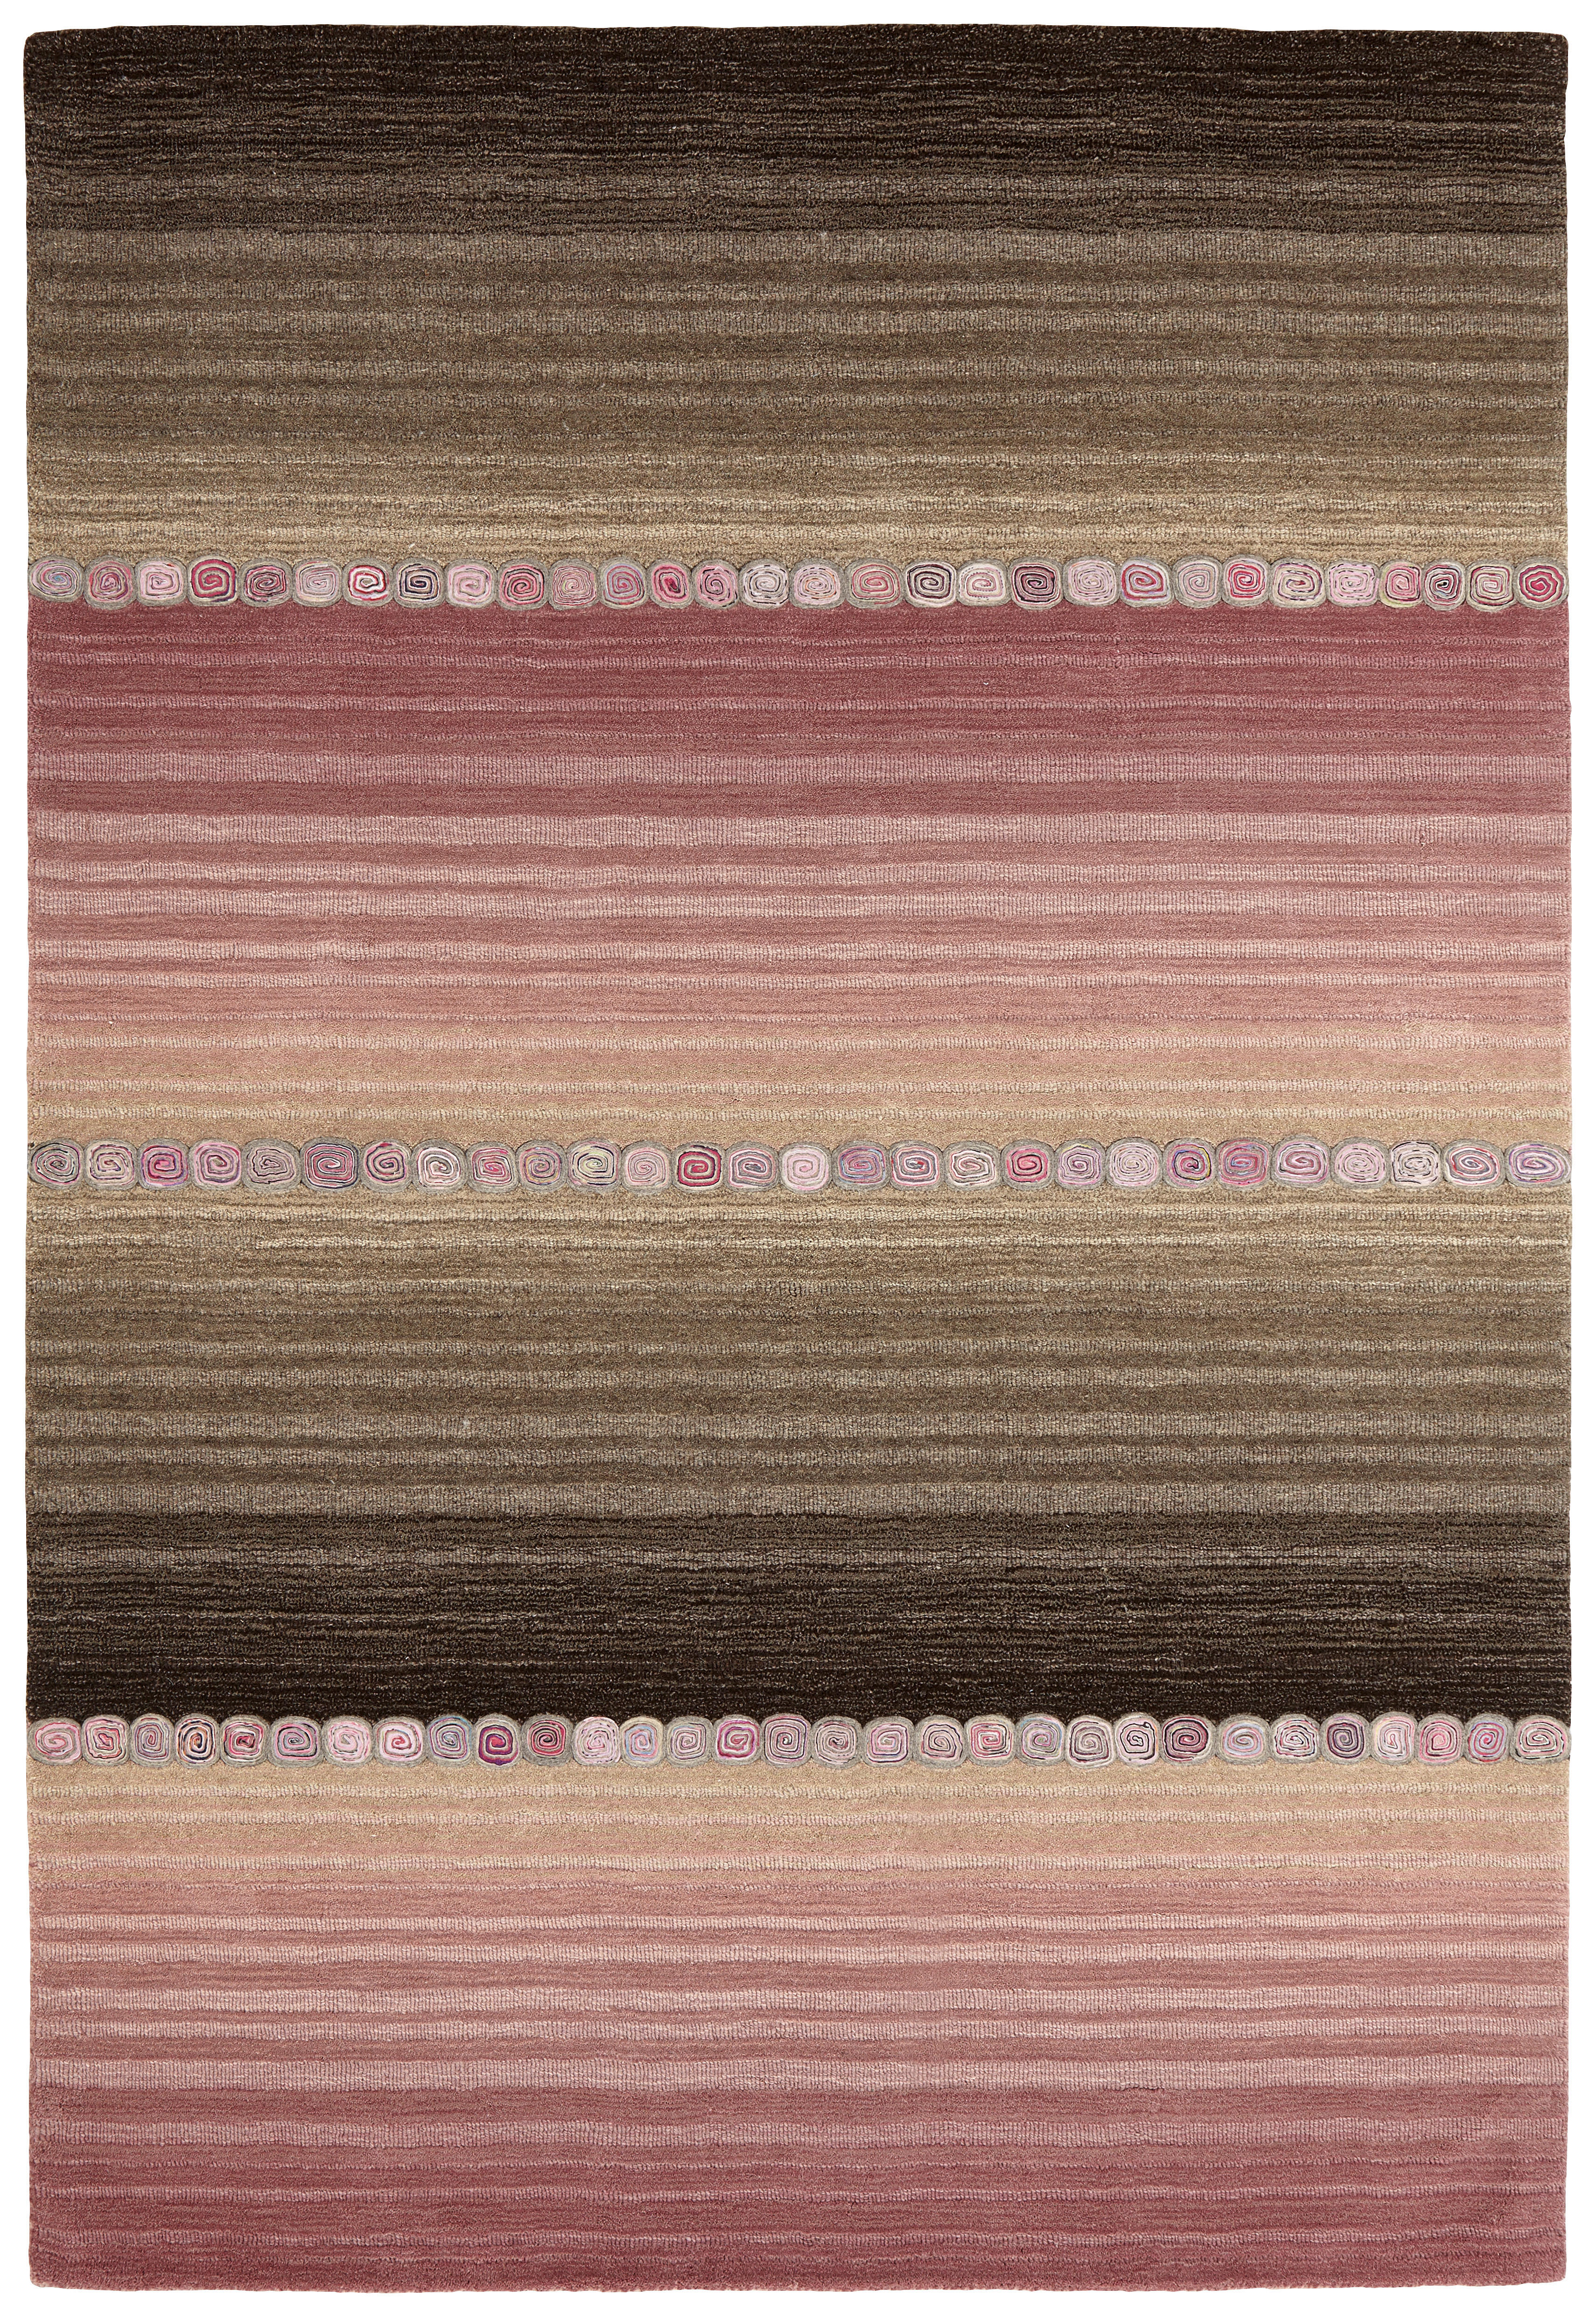 Cazaris ORIENTÁLNÍ KOBEREC, 250/350 cm, šedá, pink - šedá, pink